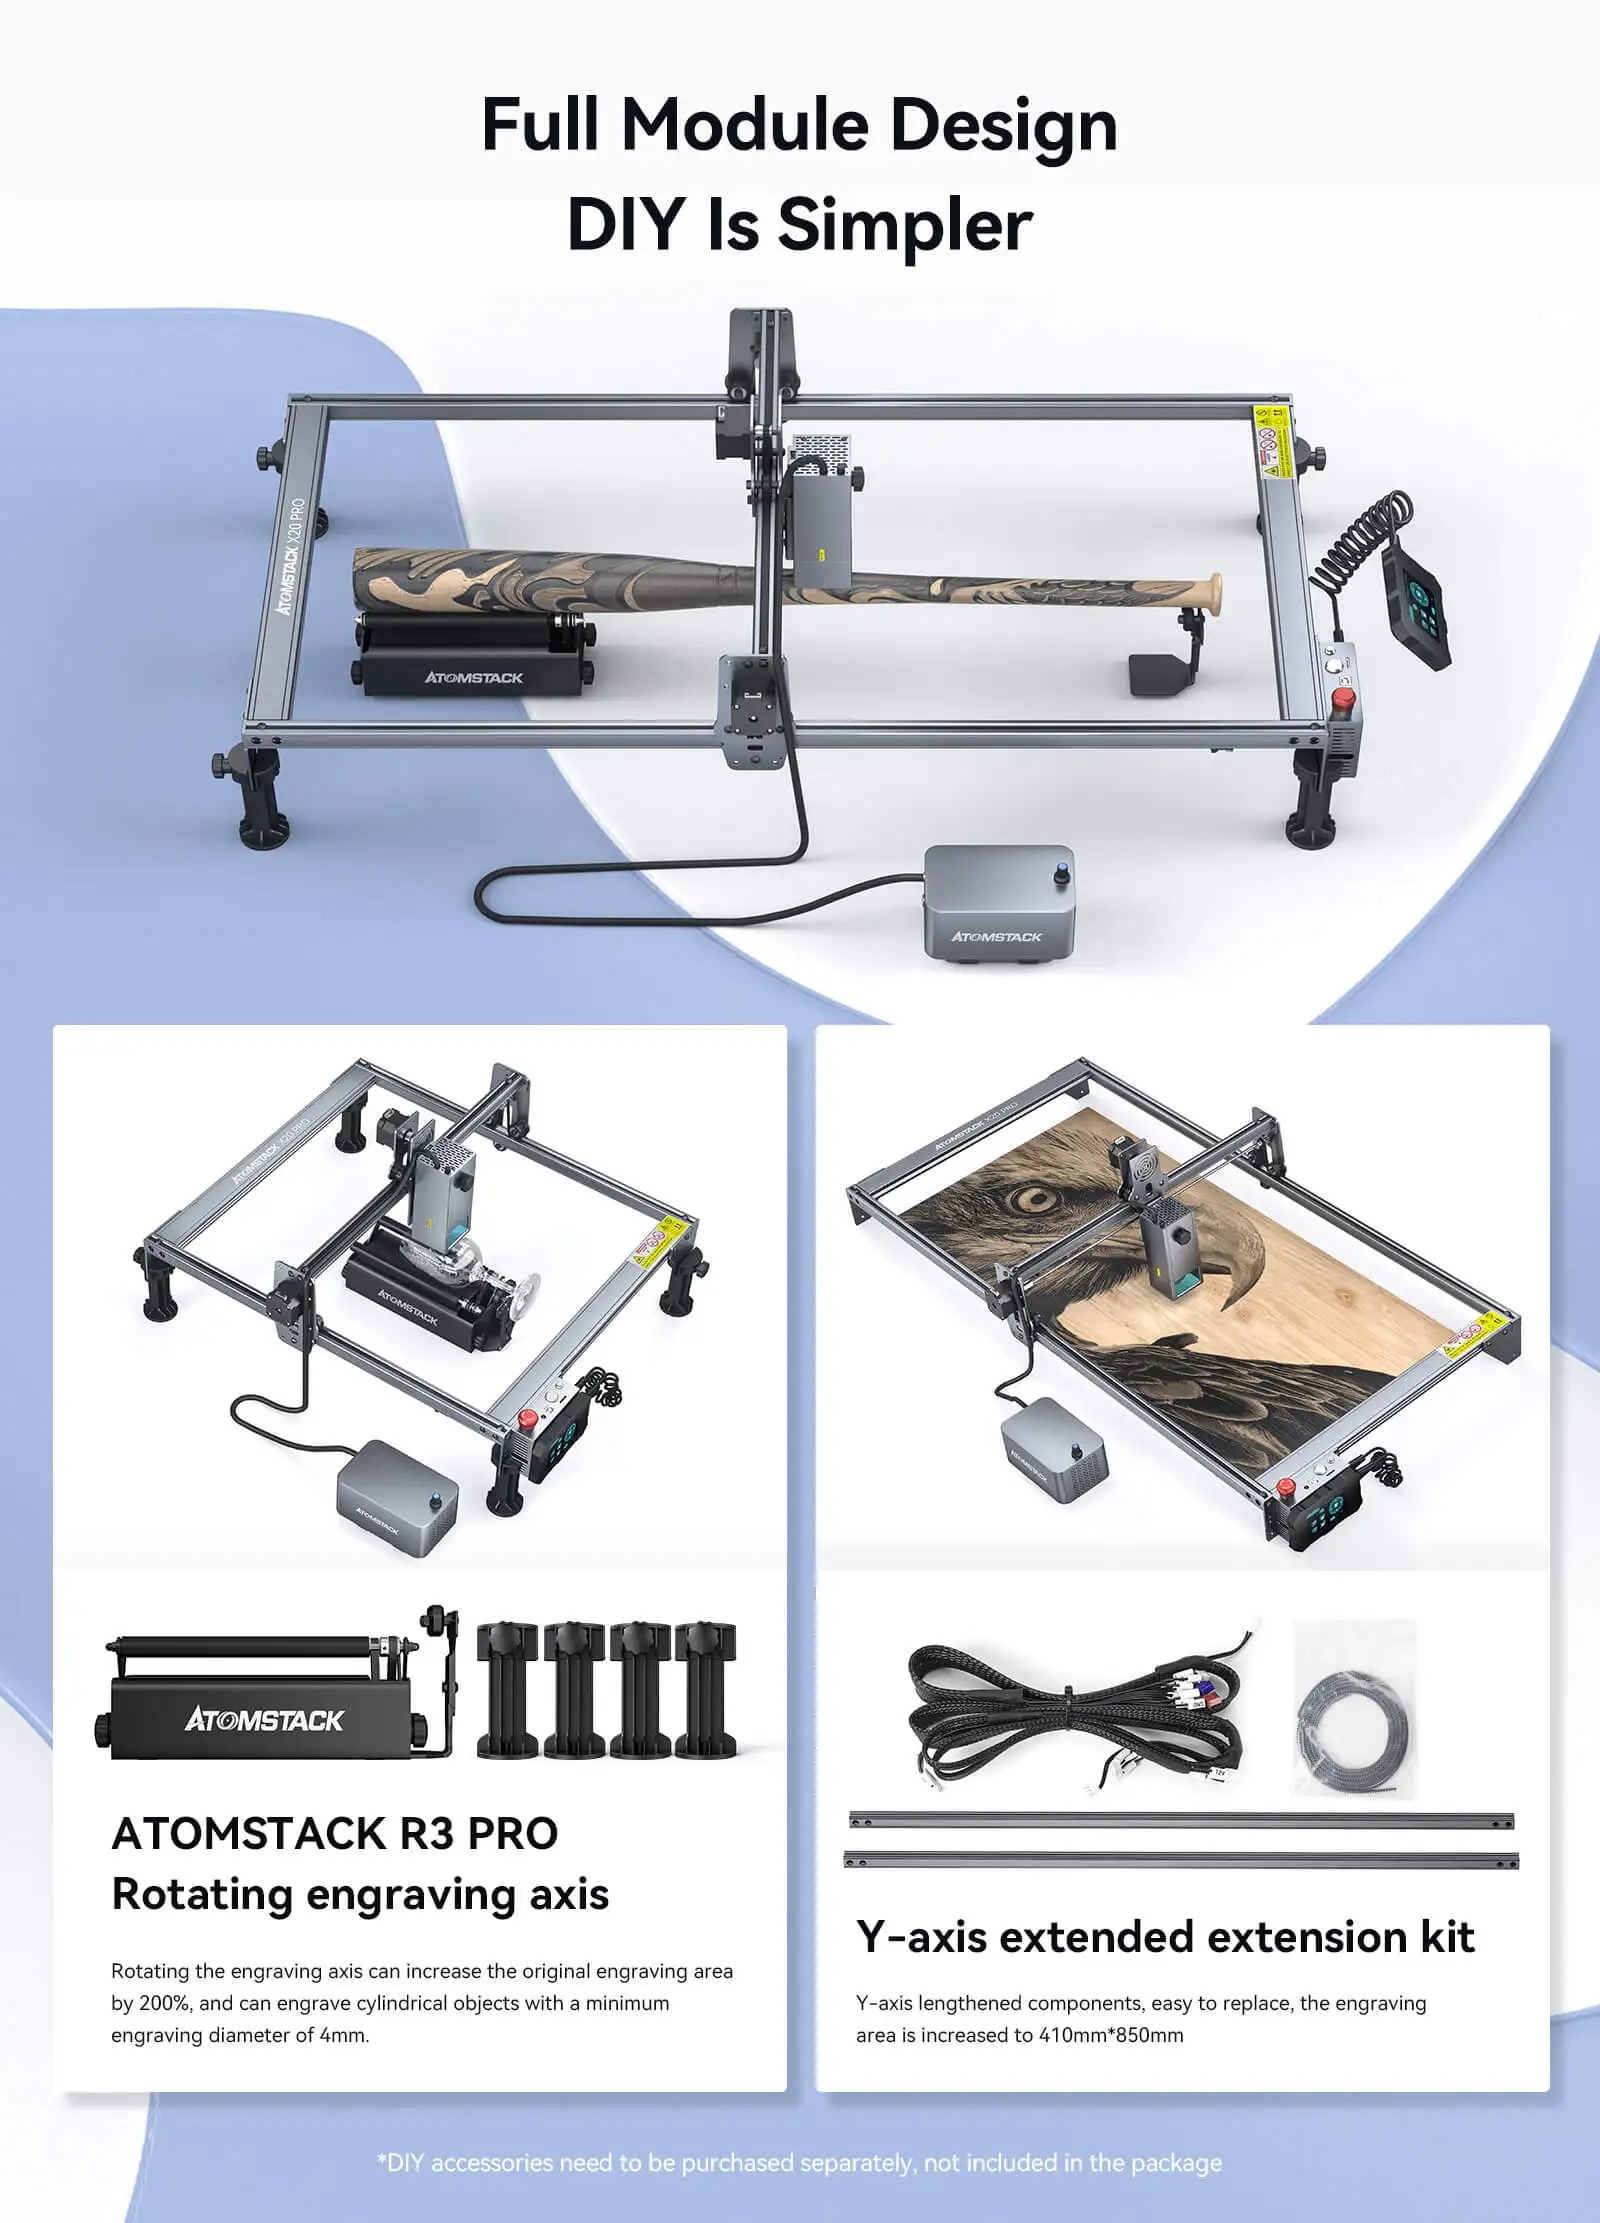 AtomStack Laser Engraver Engraving Area Extension Kit 850x400mm for Laser  Engraver and Cutter